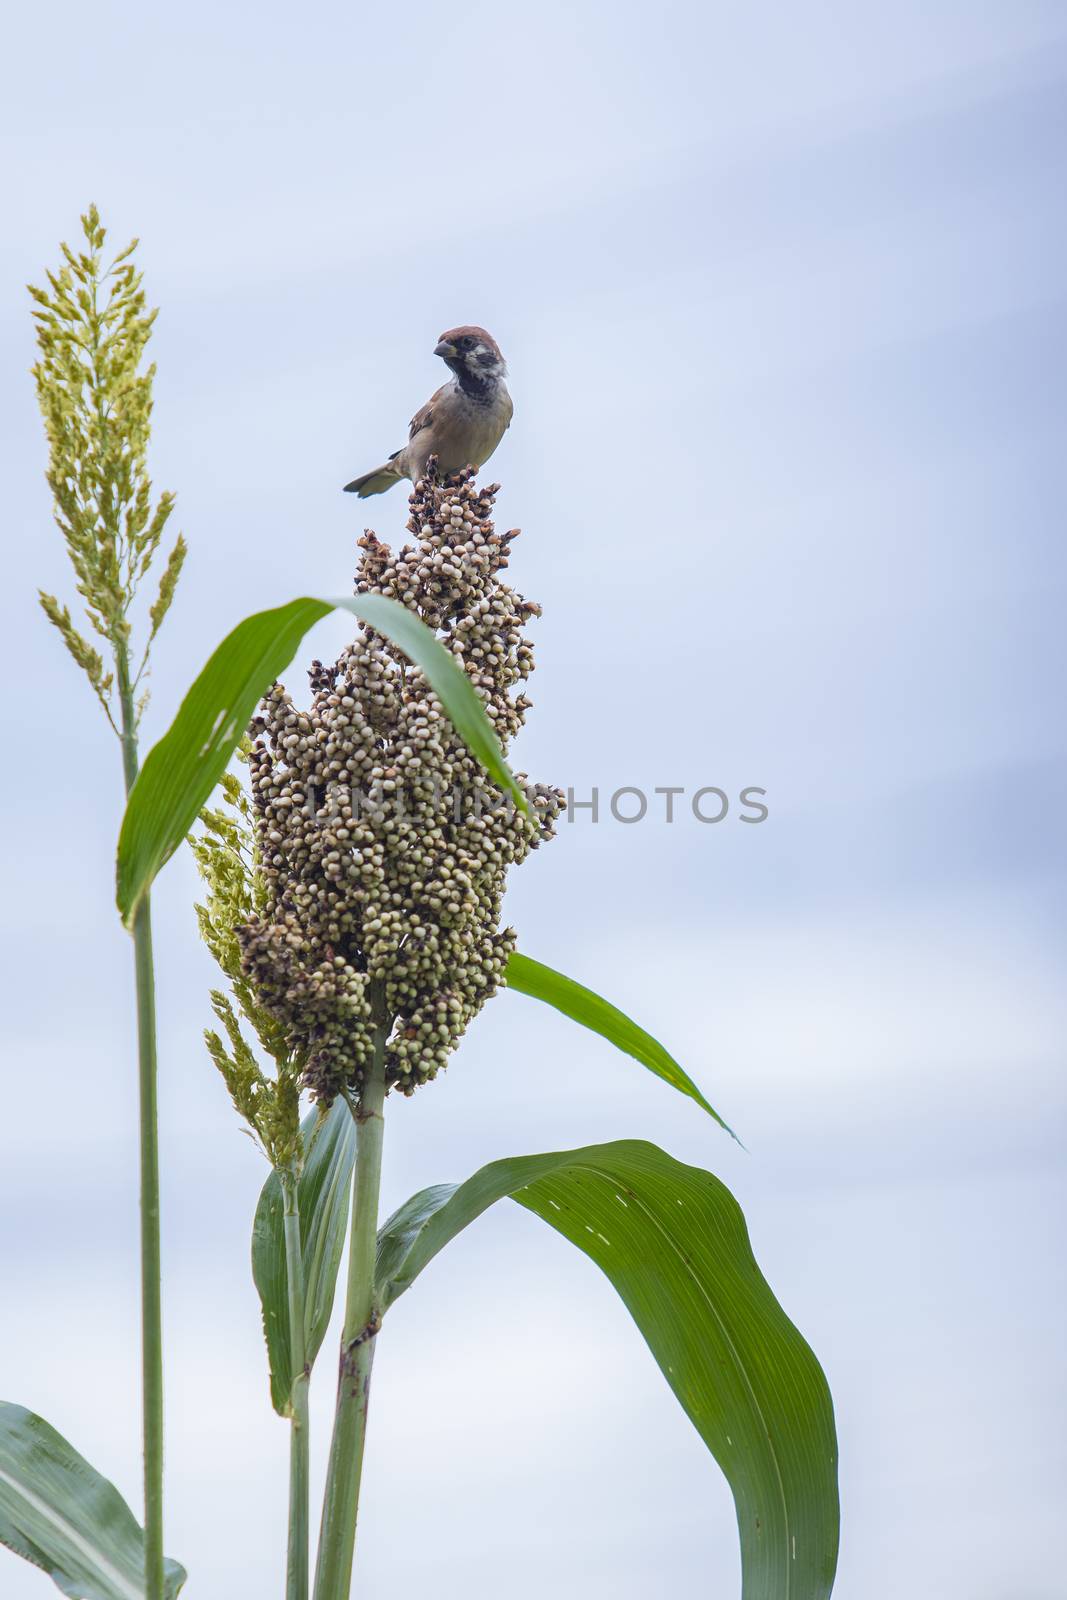 sparrow bird on sorghum plant and white blue sky